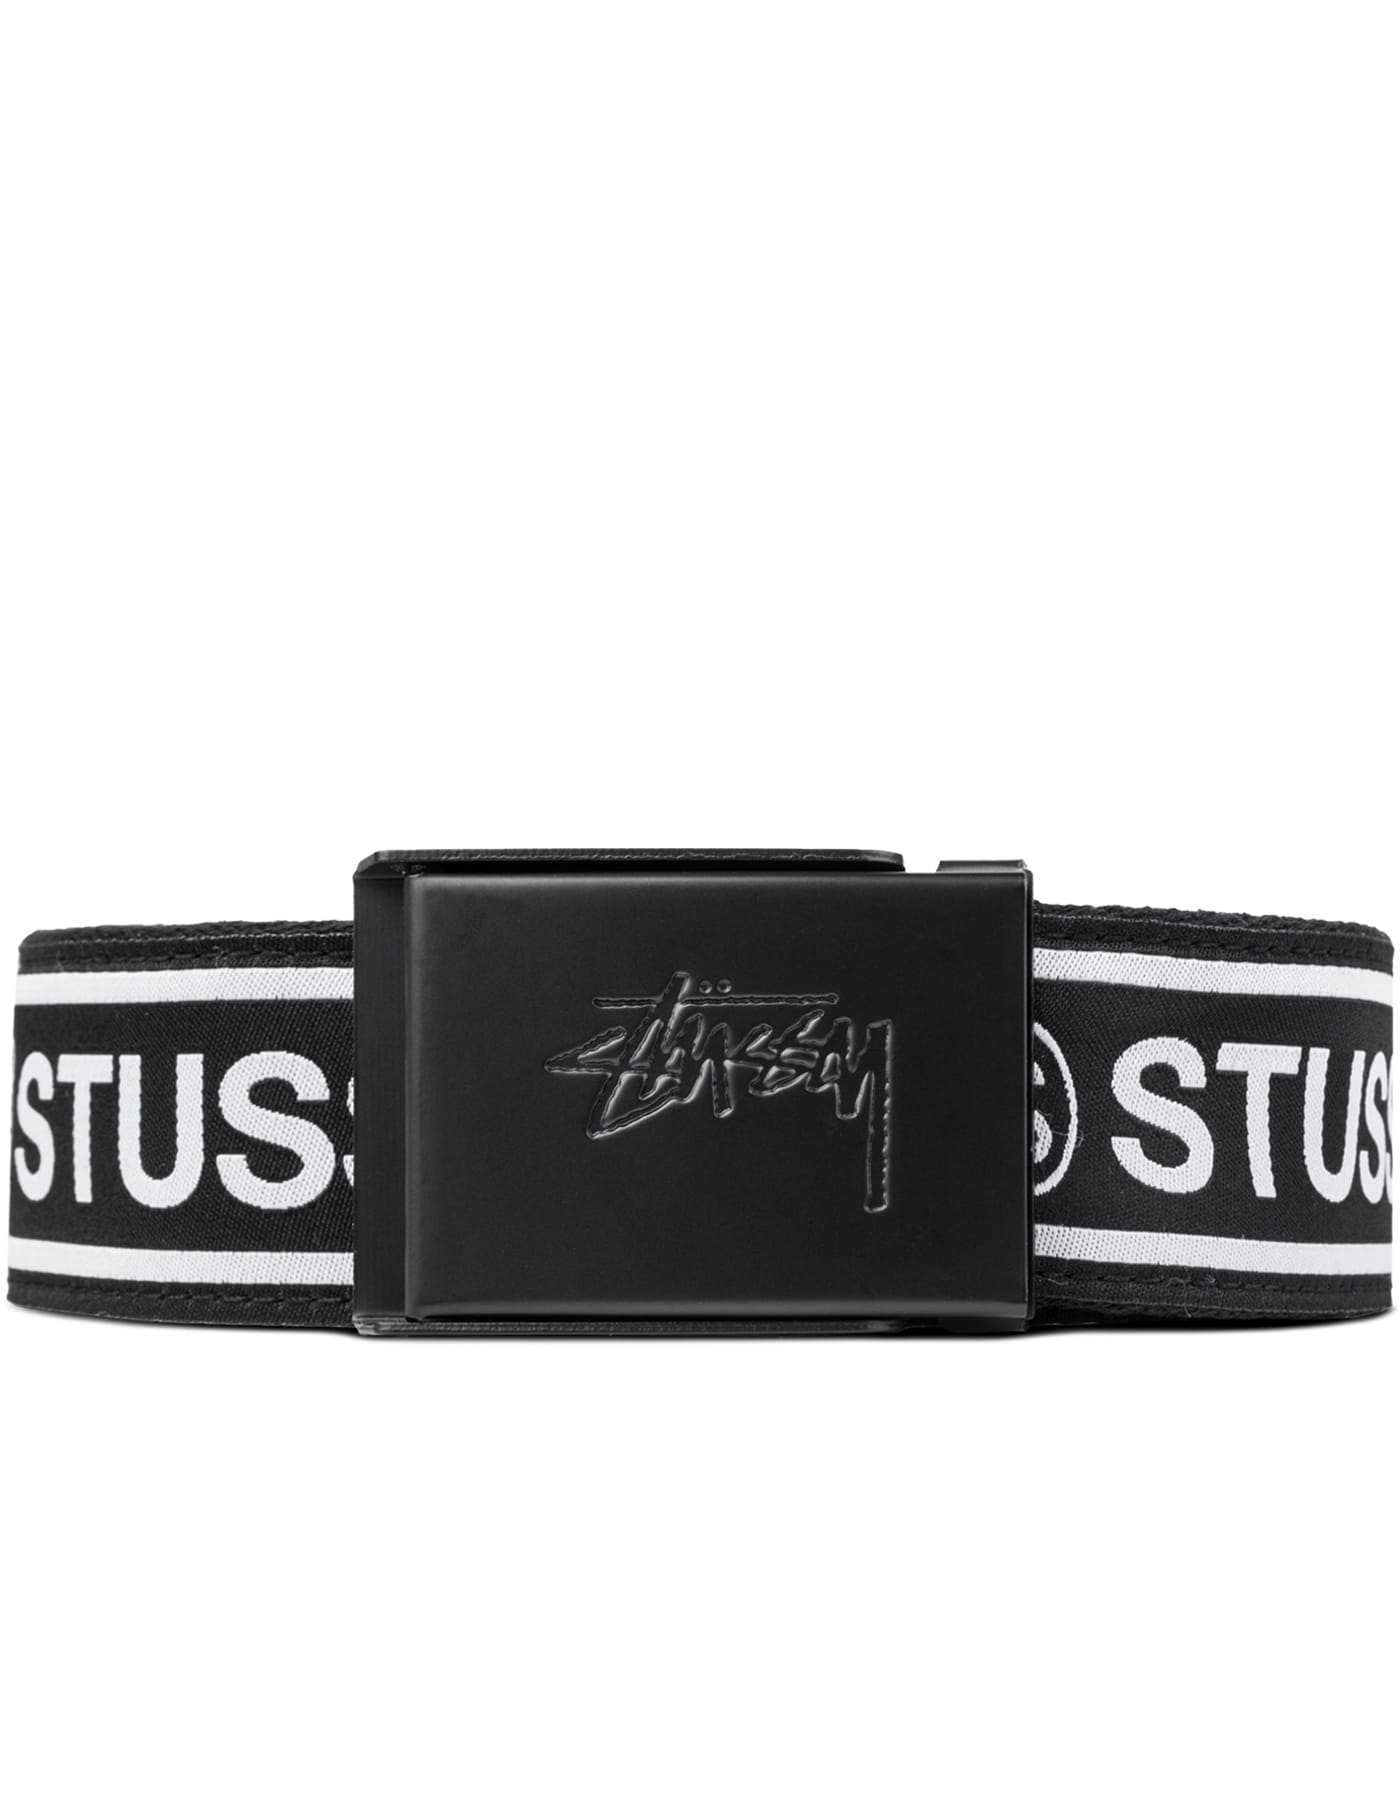 Stüssy - Stussy Jacquard Web Belt | HBX - Globally Curated Fashion 